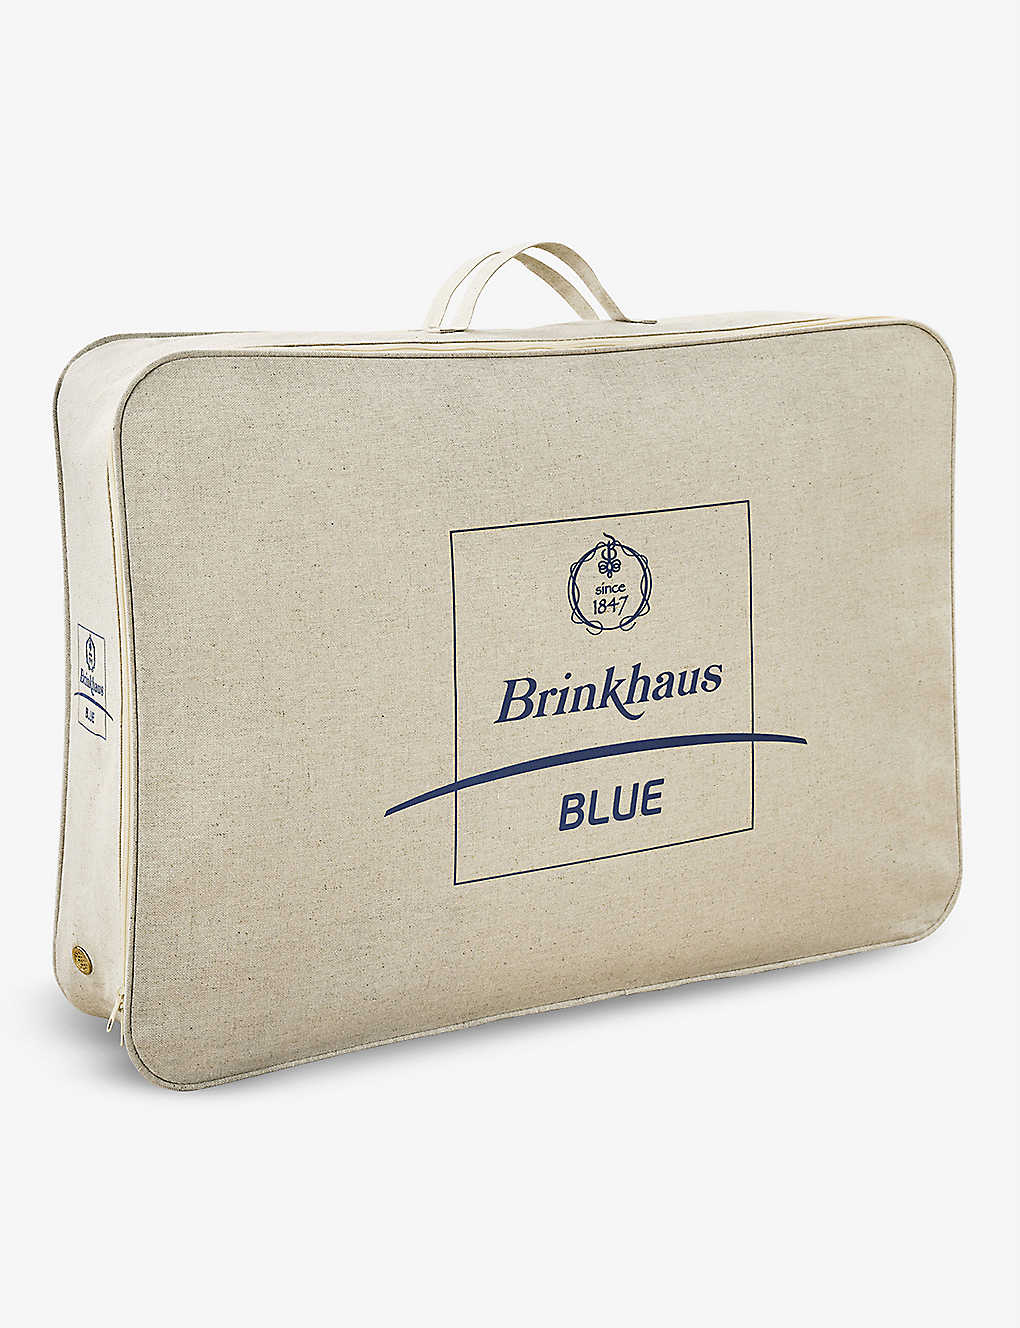 Brinkhaus White Blue Medium Down Duvet 135x200cm Single